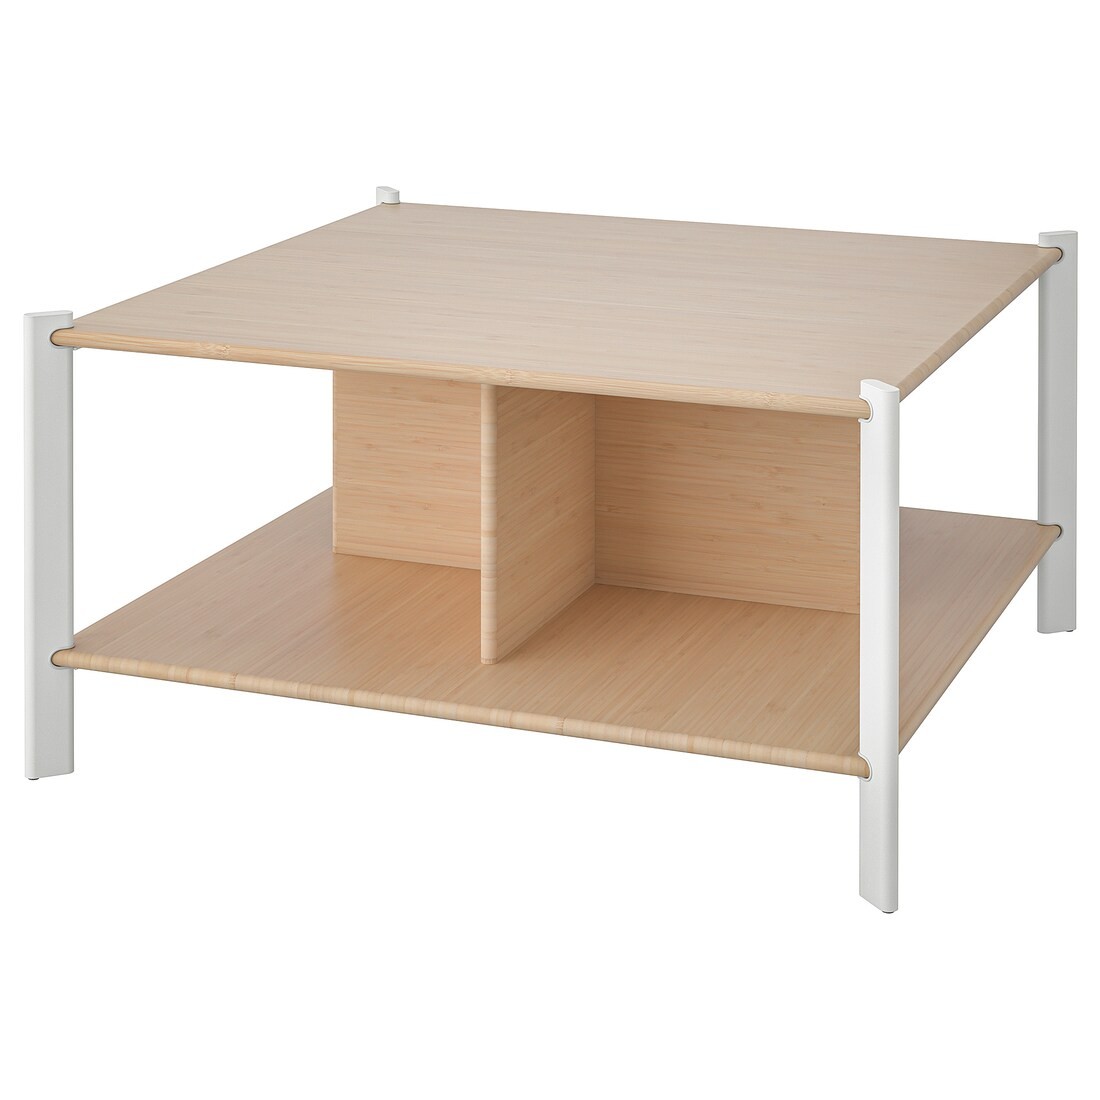 IKEA JÄTTESTA Журнальный стол, белый / светлый бамбук, 80x80 см 30538792 305.387.92